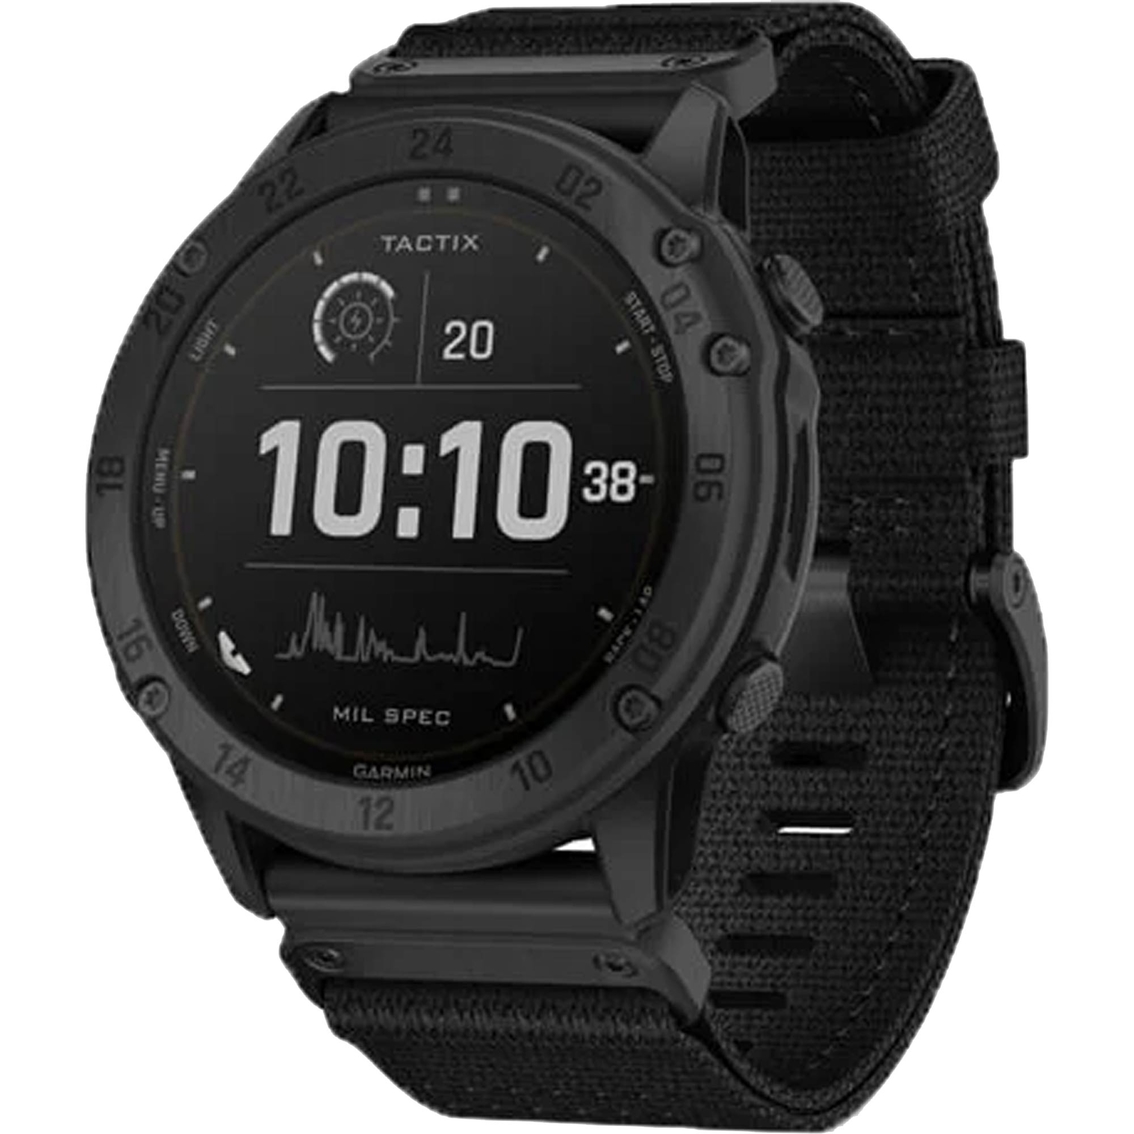 Garmin Tactix Delta Ballistic Edition Gps Smartwatch 010-02357-50 | Fitness & Gps Watches | Home Office & School | Shop The Exchange